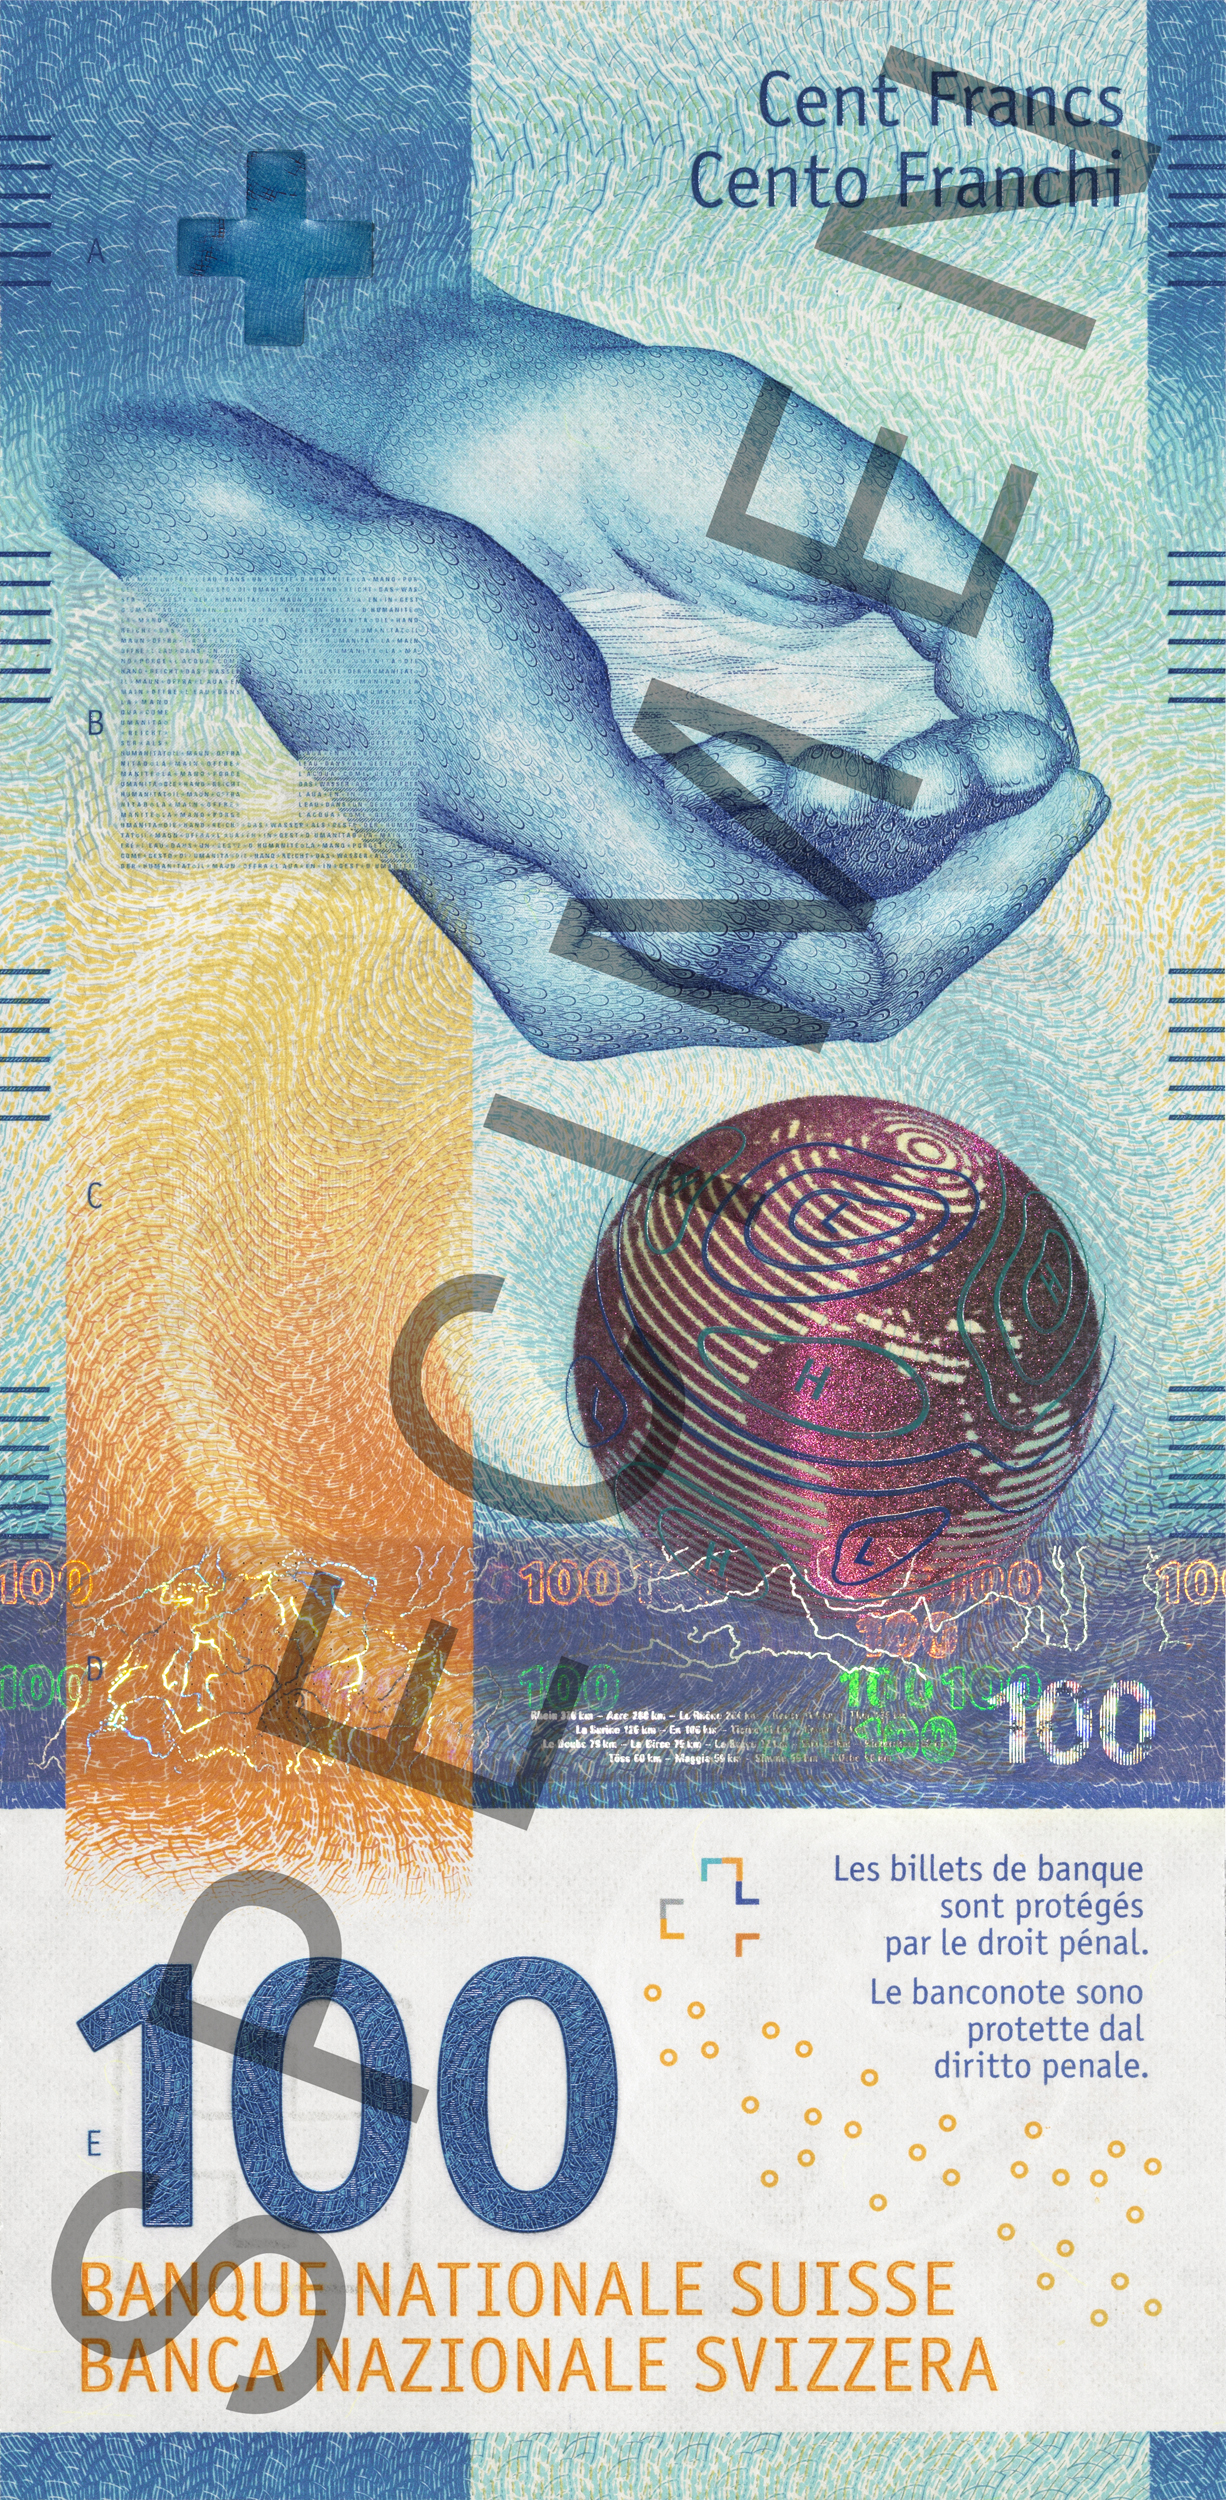 100-franc note, specimen (front)